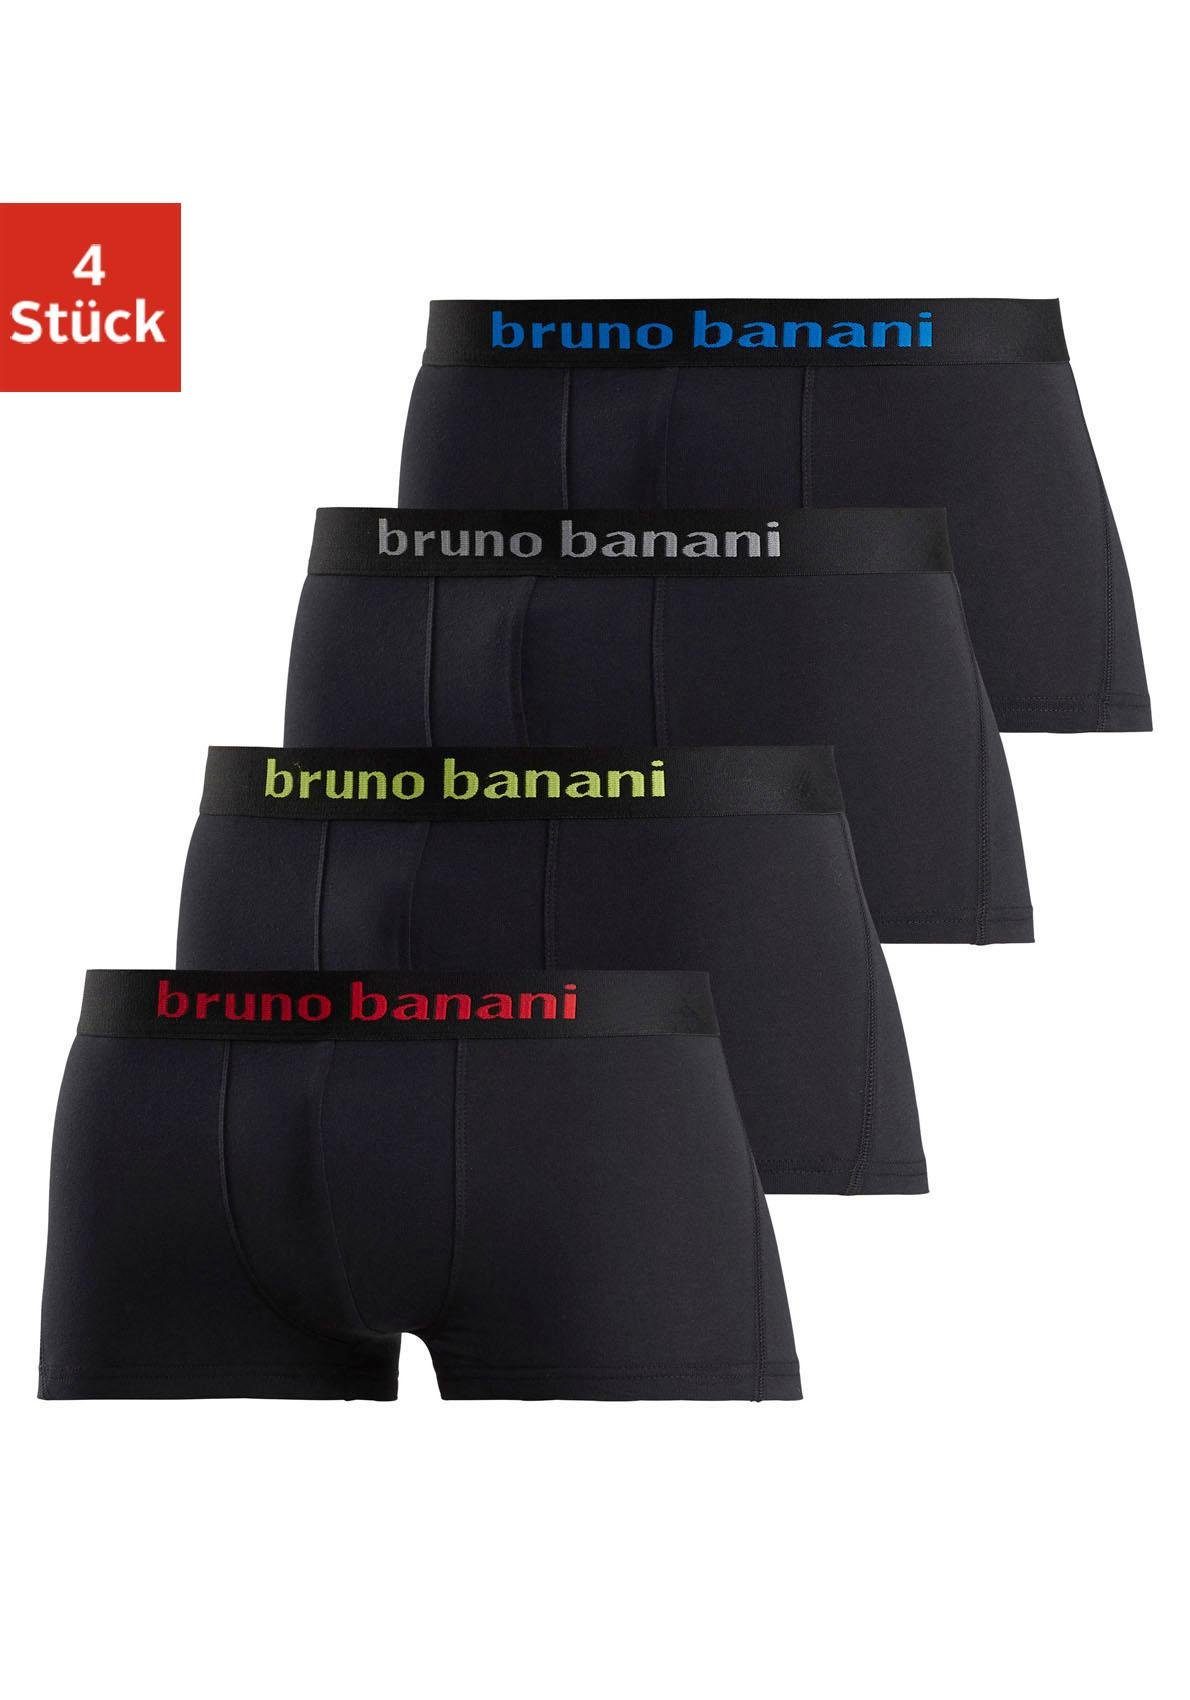 Bruno Banani Boxershorts (Packung, 4-St) in Hipster-Form mit Logo Webbund schwarz